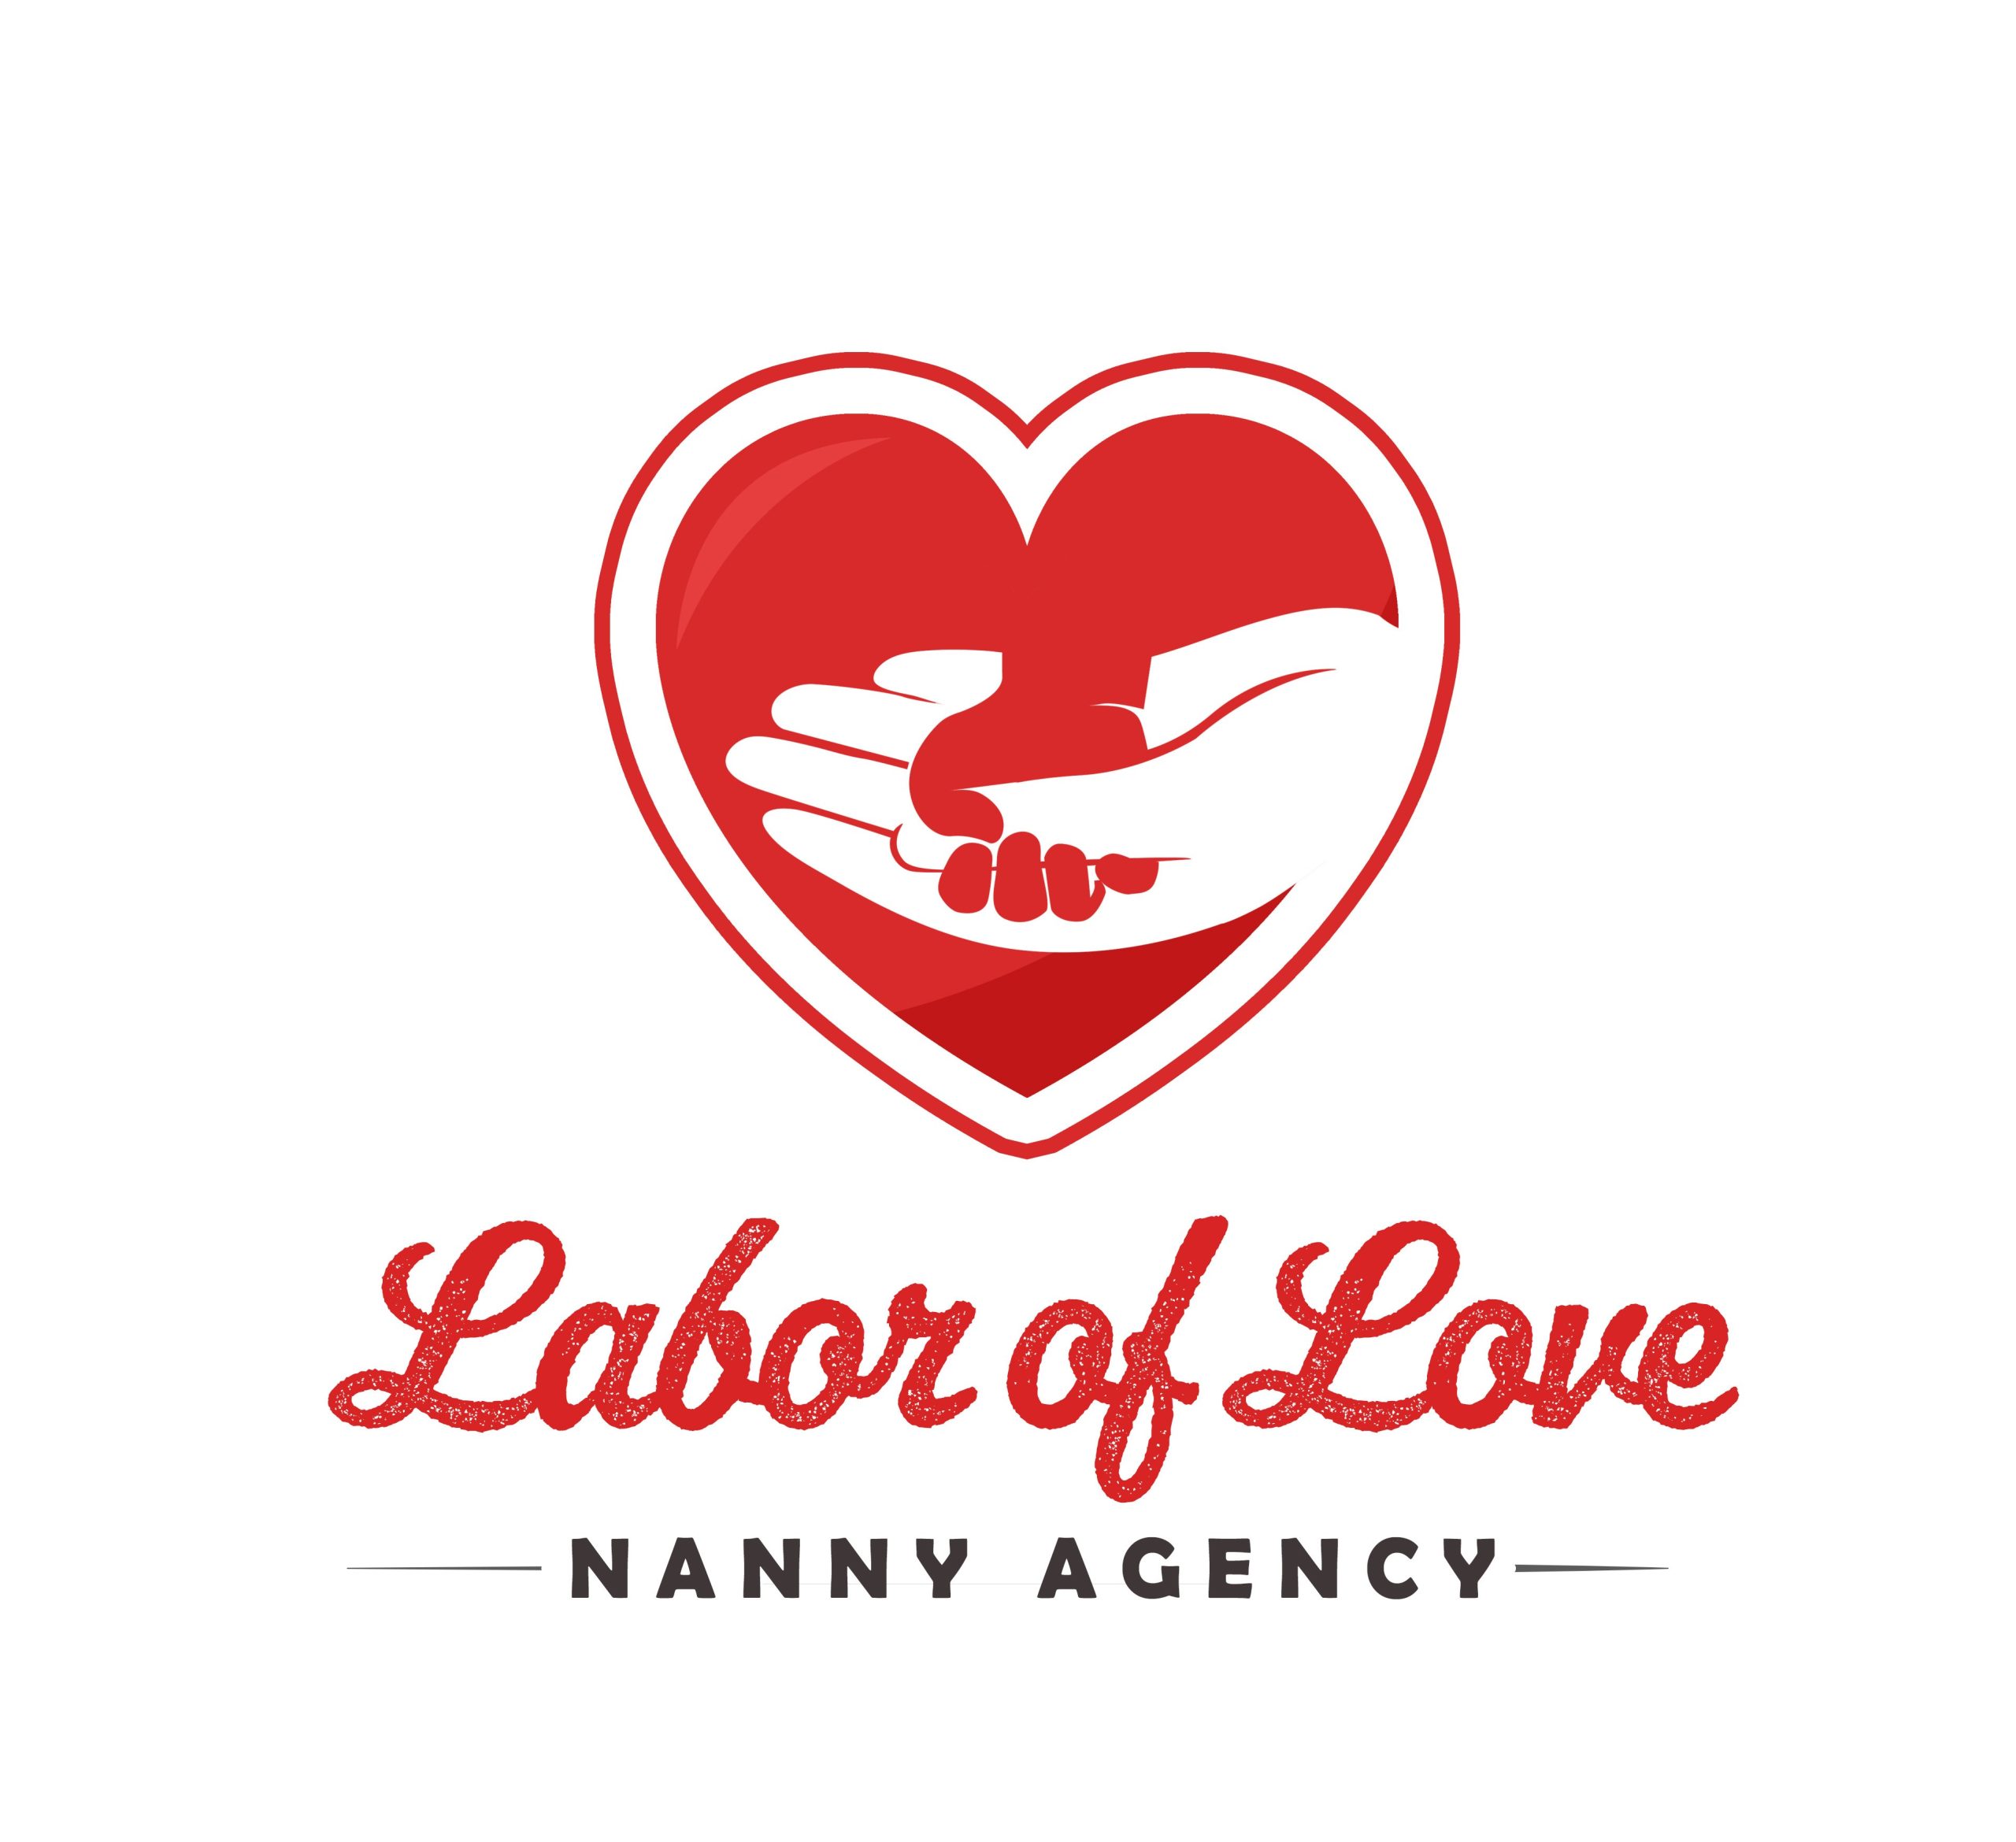 Labor of Love Nanny Agency